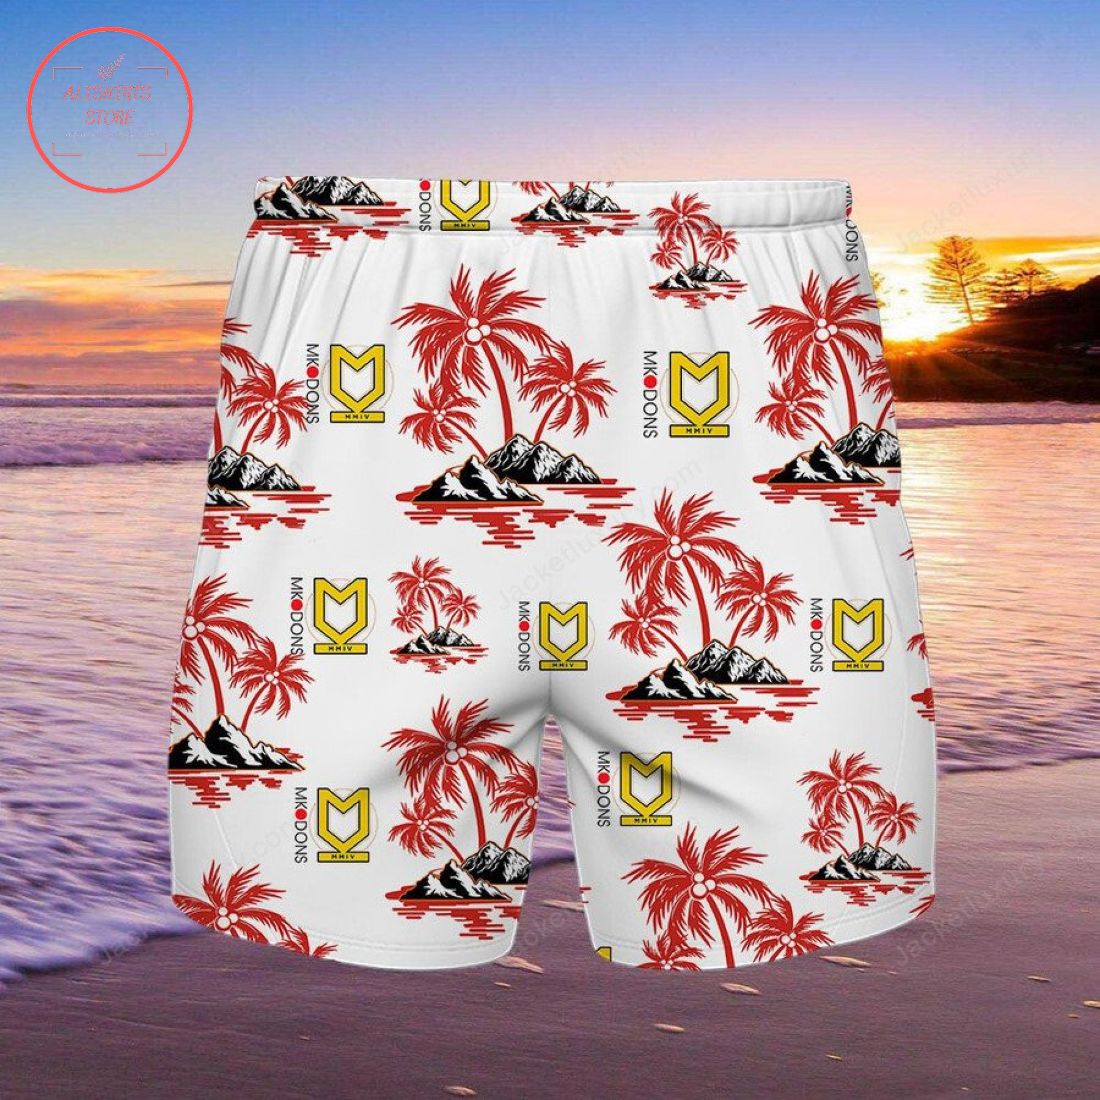 Milton Keynes Dons FC Hawaiian Shirt and Beach Shorts